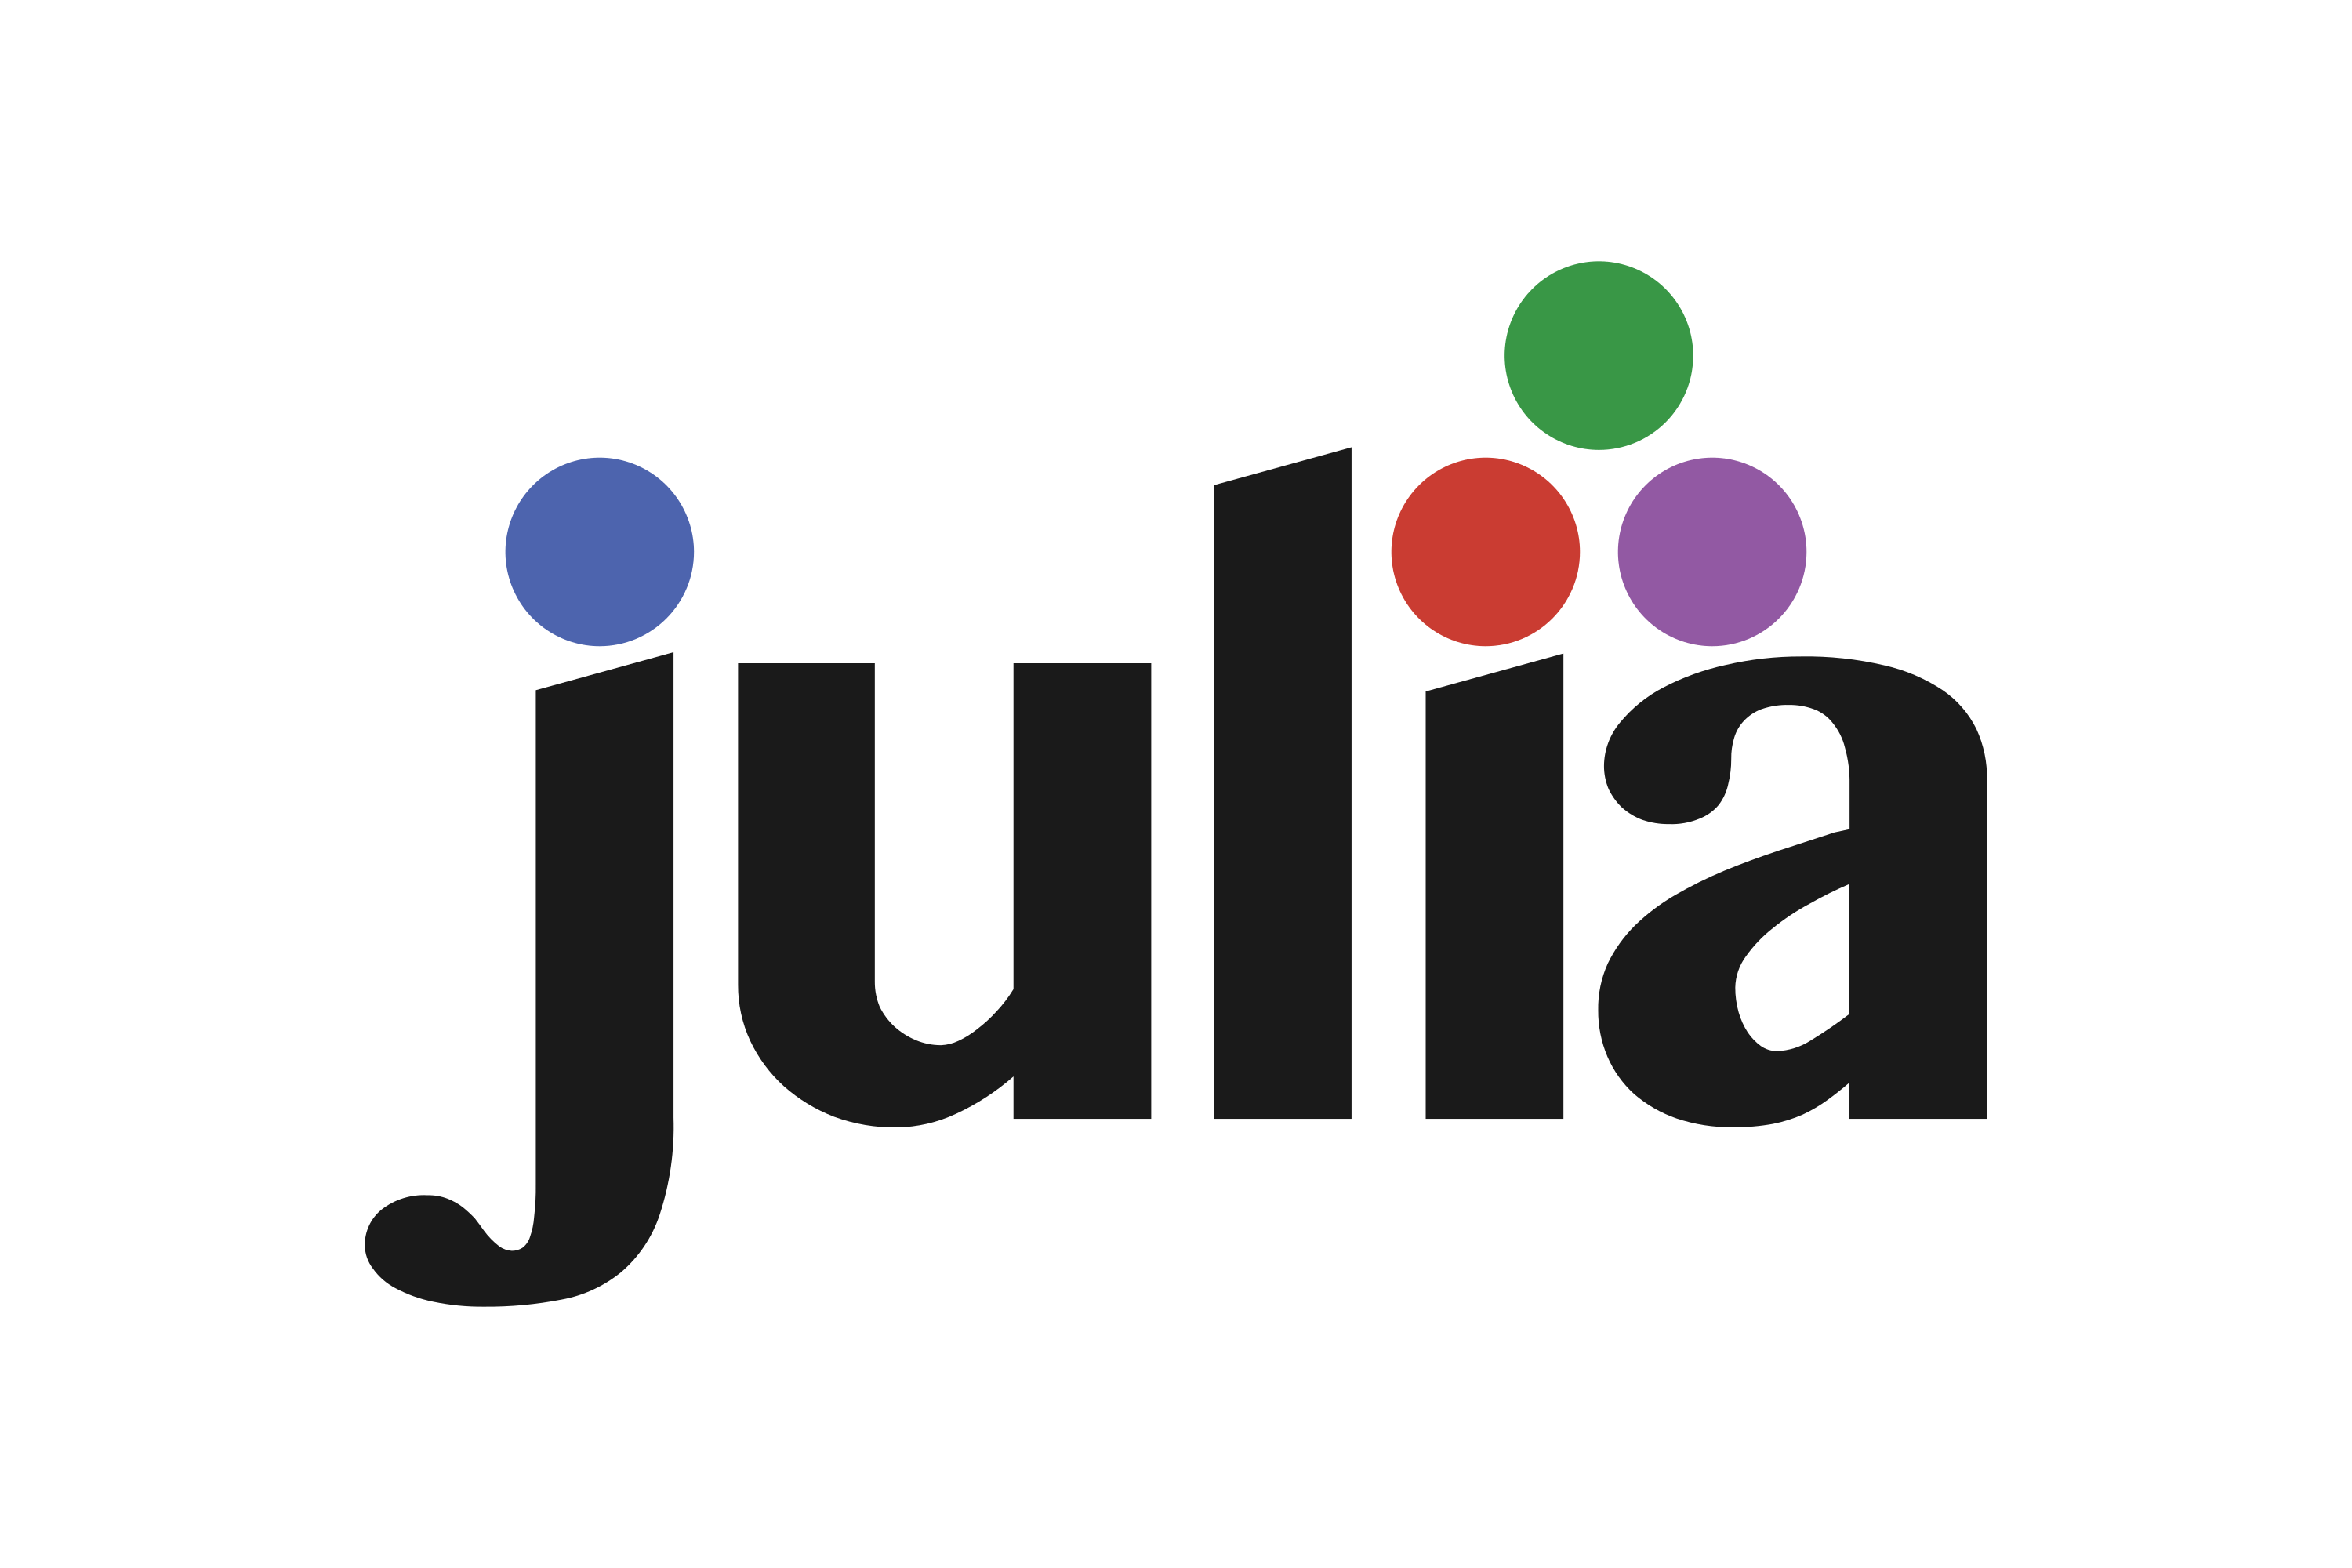 Machine Learning in Julia. The Full 